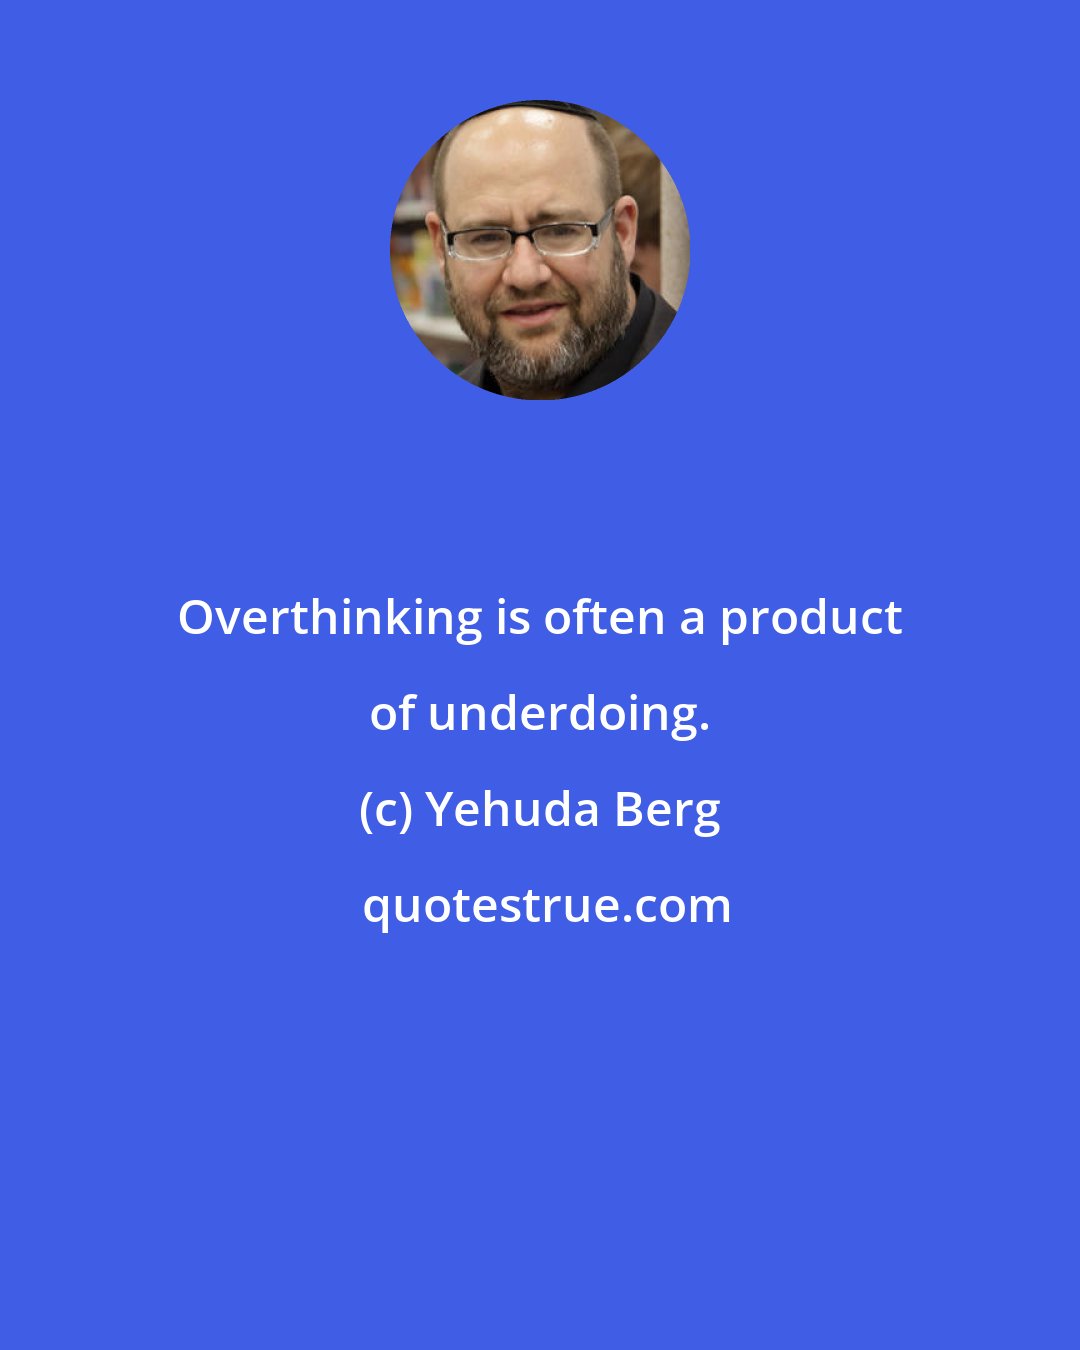 Yehuda Berg: Overthinking is often a product of underdoing.